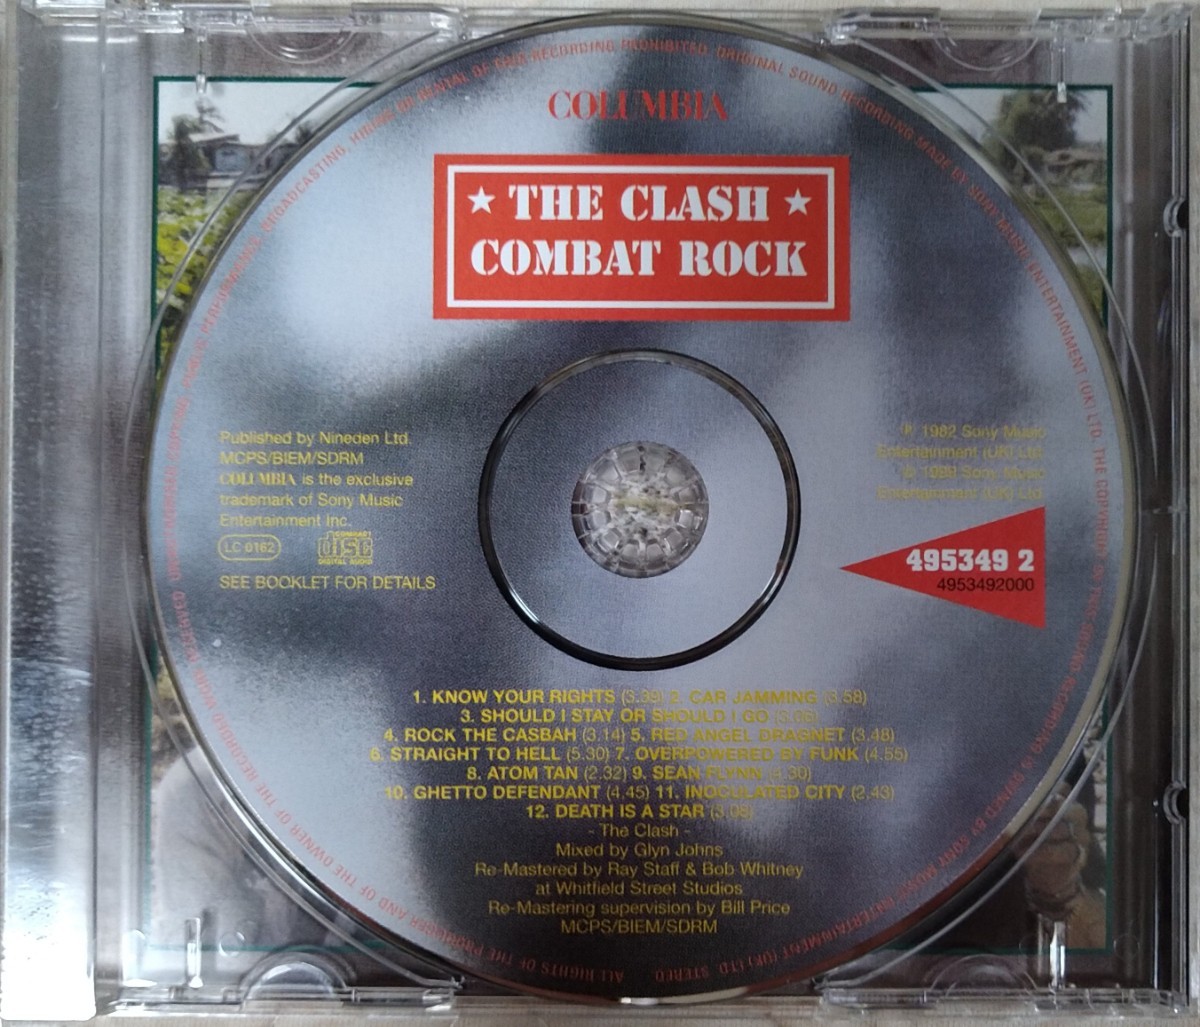 The Clash Combat Rock 旧規格リマスター輸入盤中古CD ザ・クラッシュ コンバット・ロック 495349 2_画像3